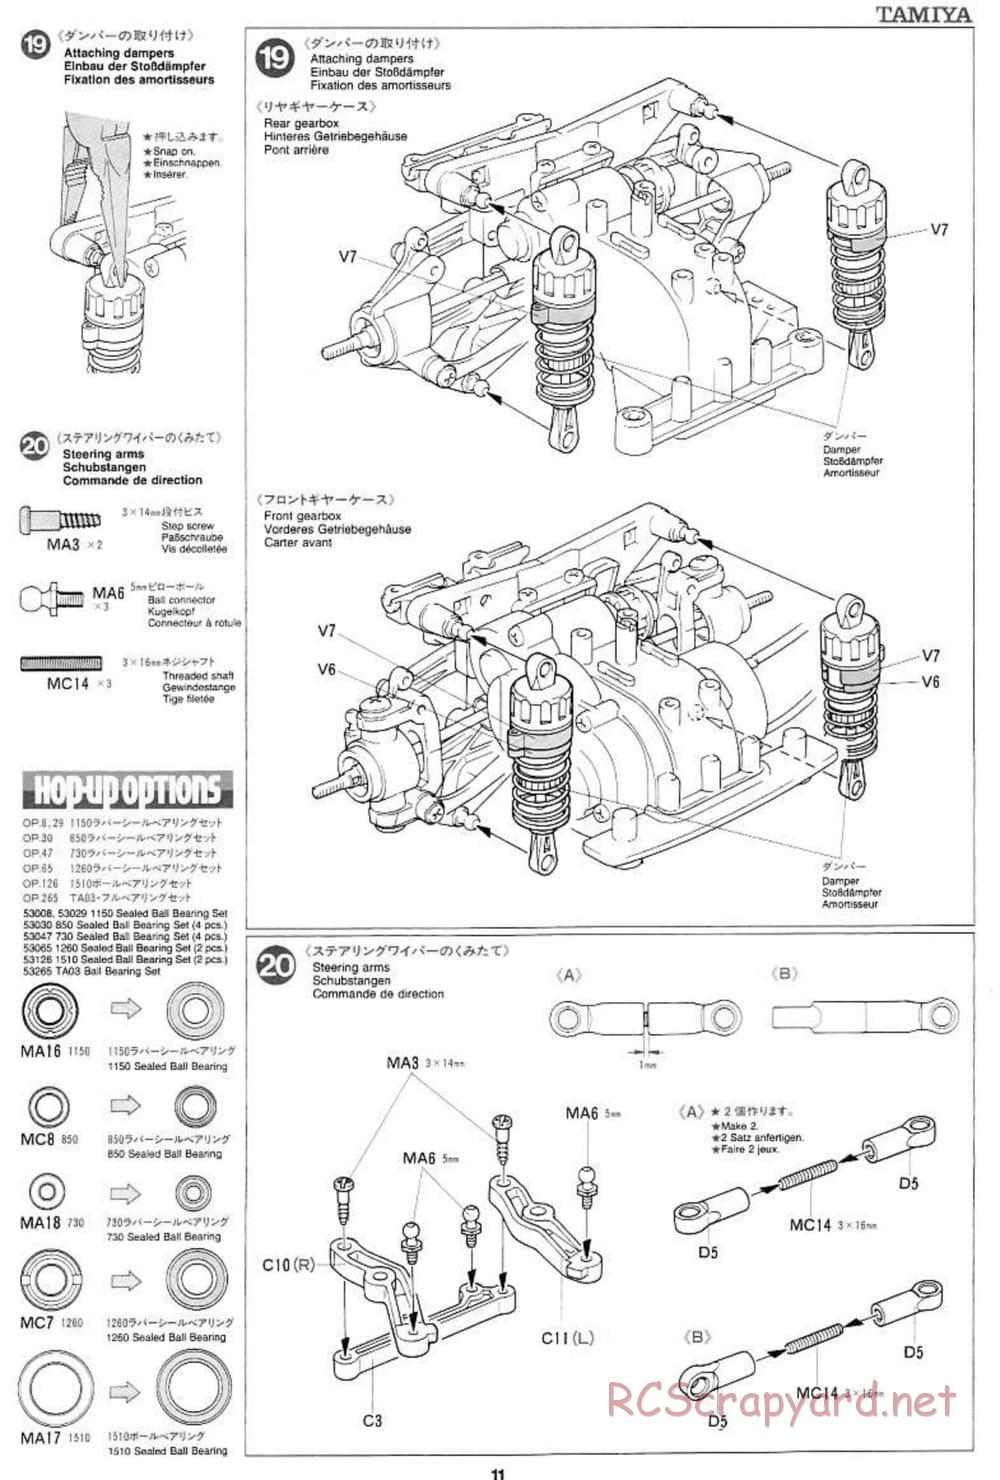 Tamiya - Toyota Corolla WRC - TA-03FS Chassis - Manual - Page 11